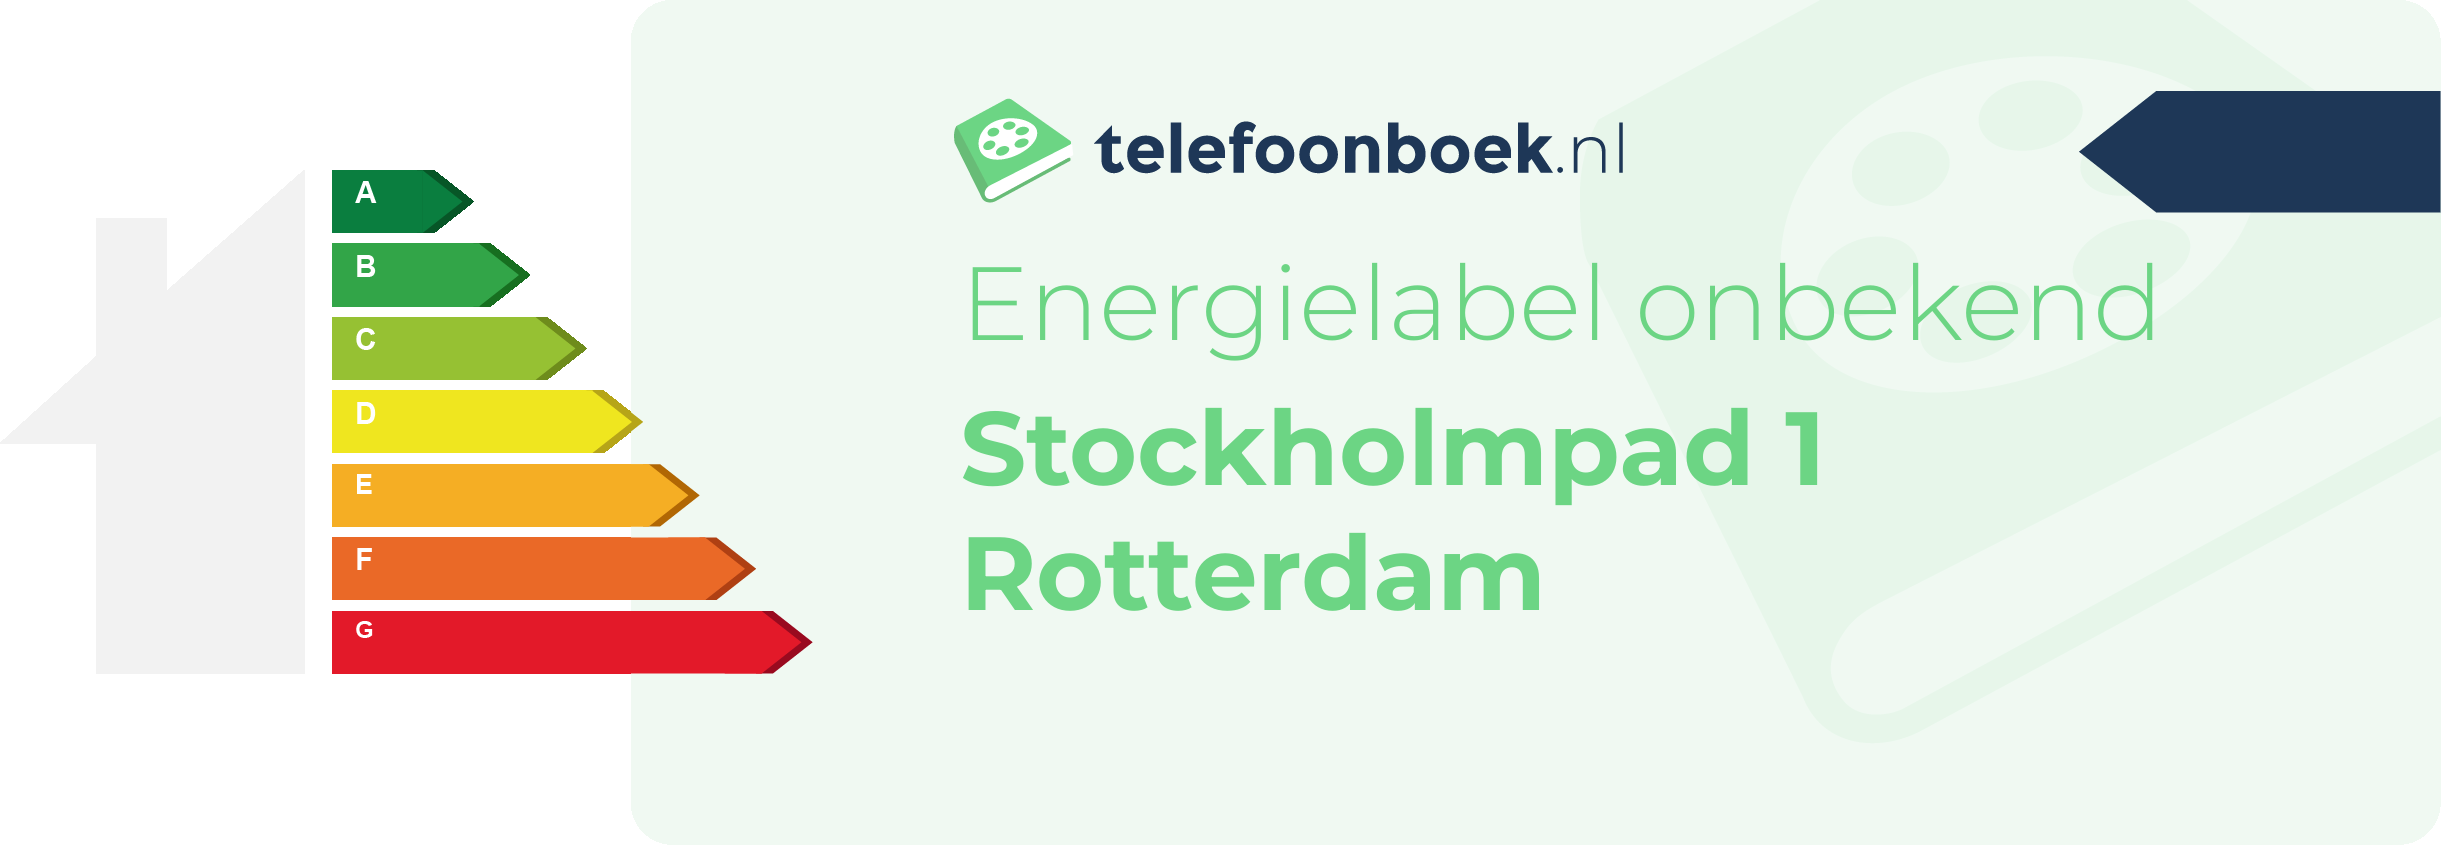 Energielabel Stockholmpad 1 Rotterdam